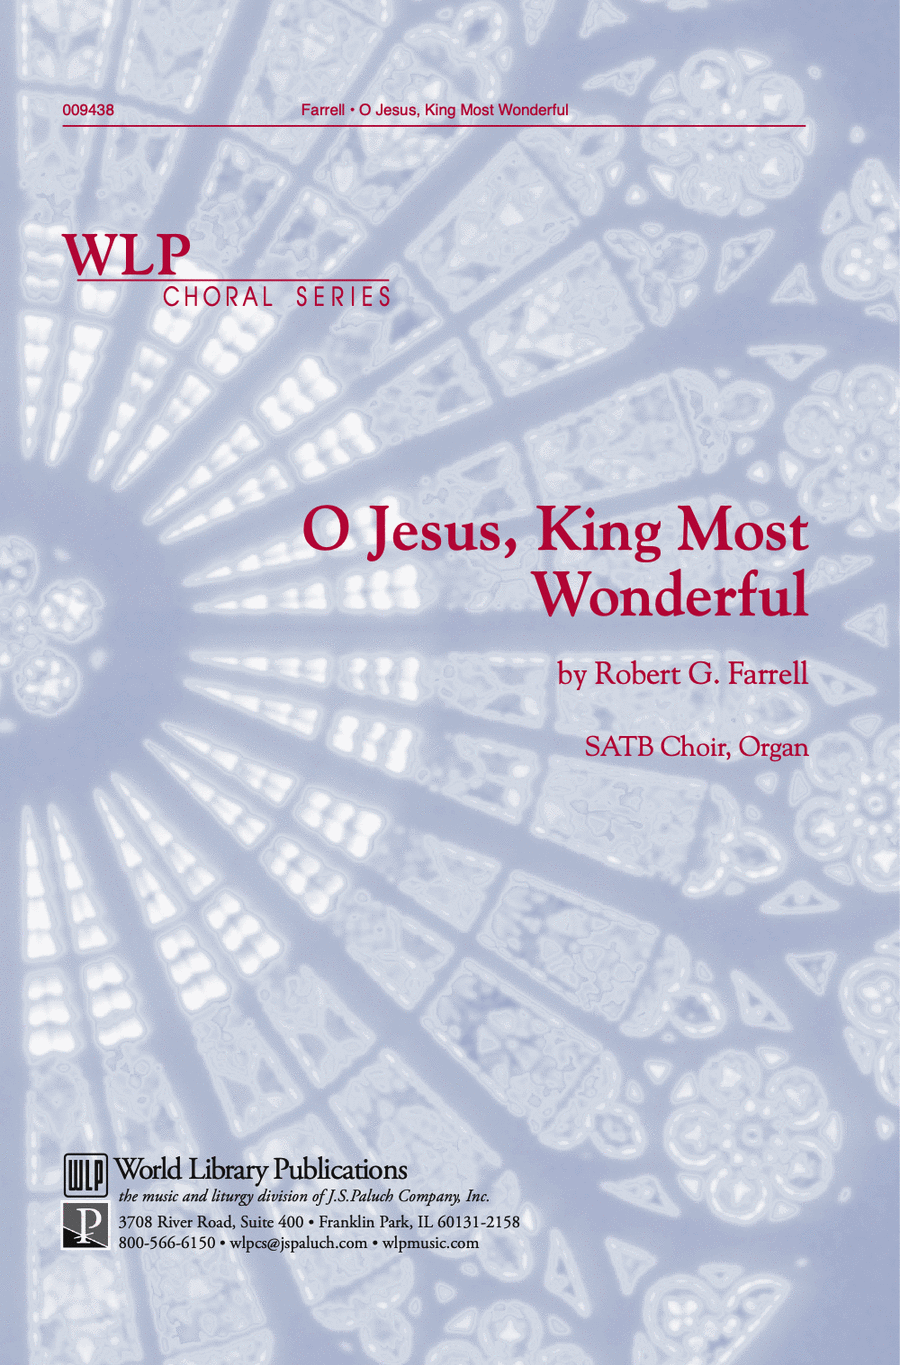 O Jesus, King Most Wonderful